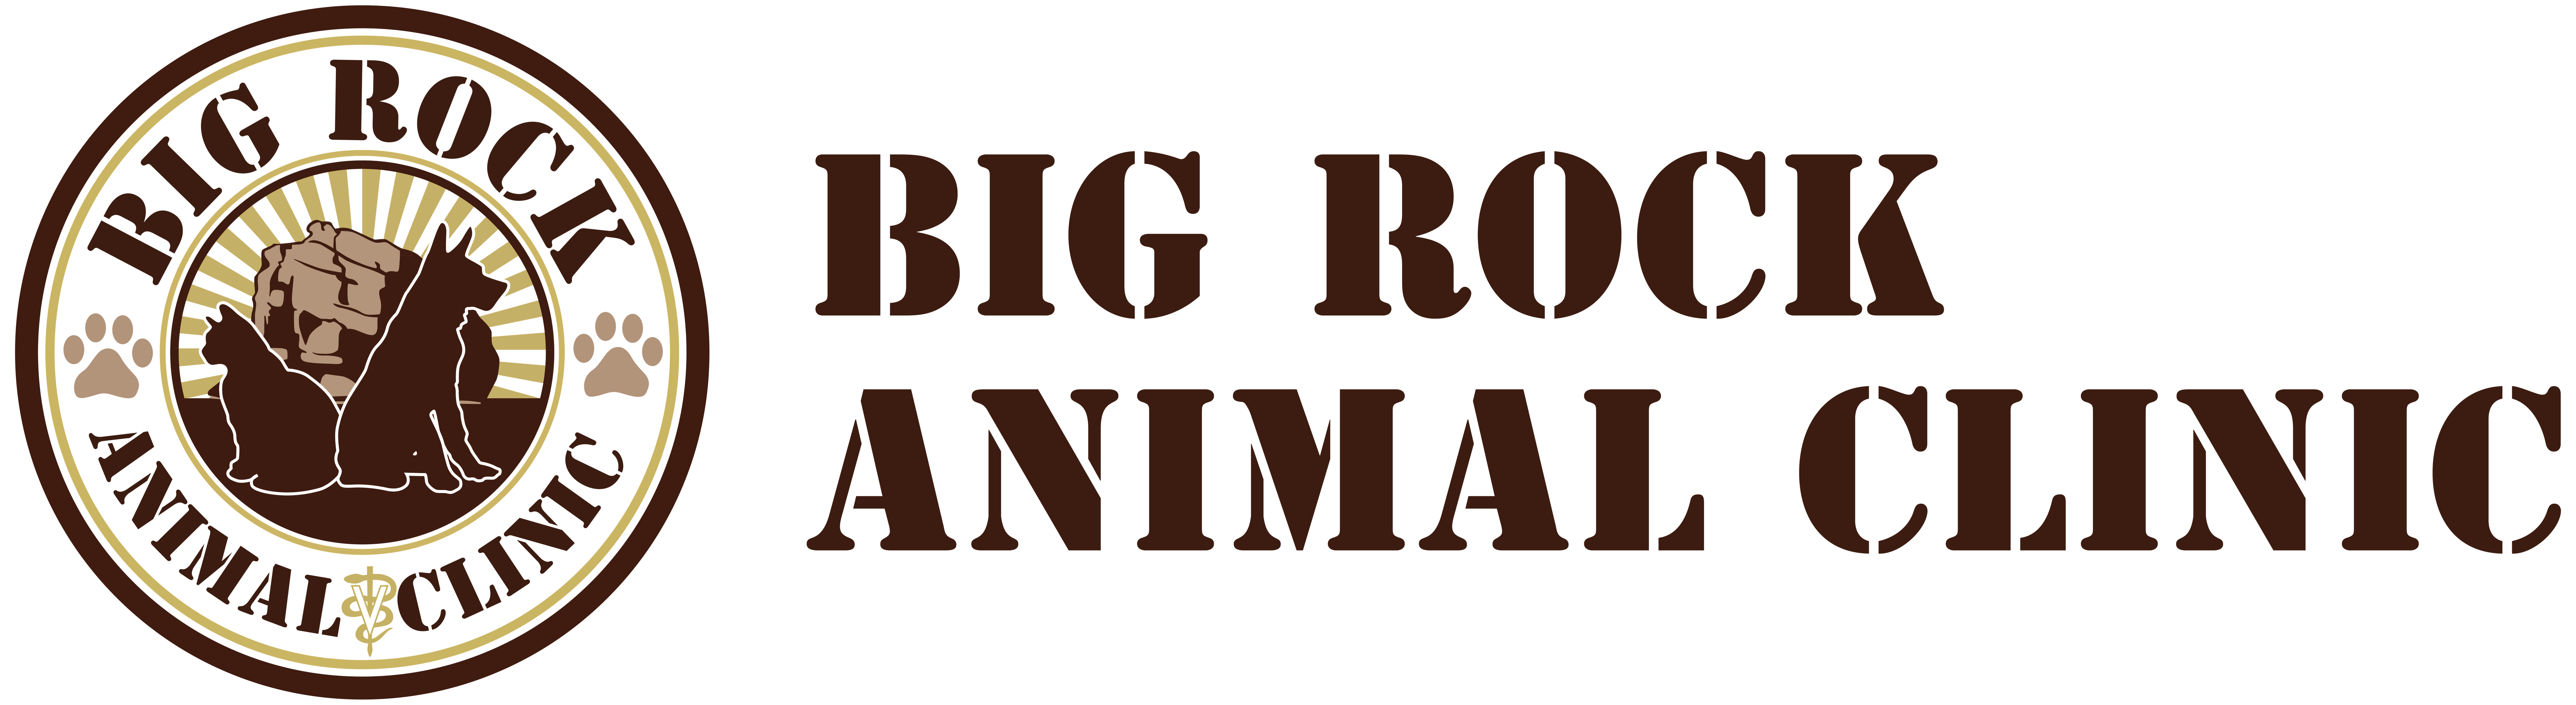 Big Rock Animal Clinic: Veterinarian in Okotoks, Alberta